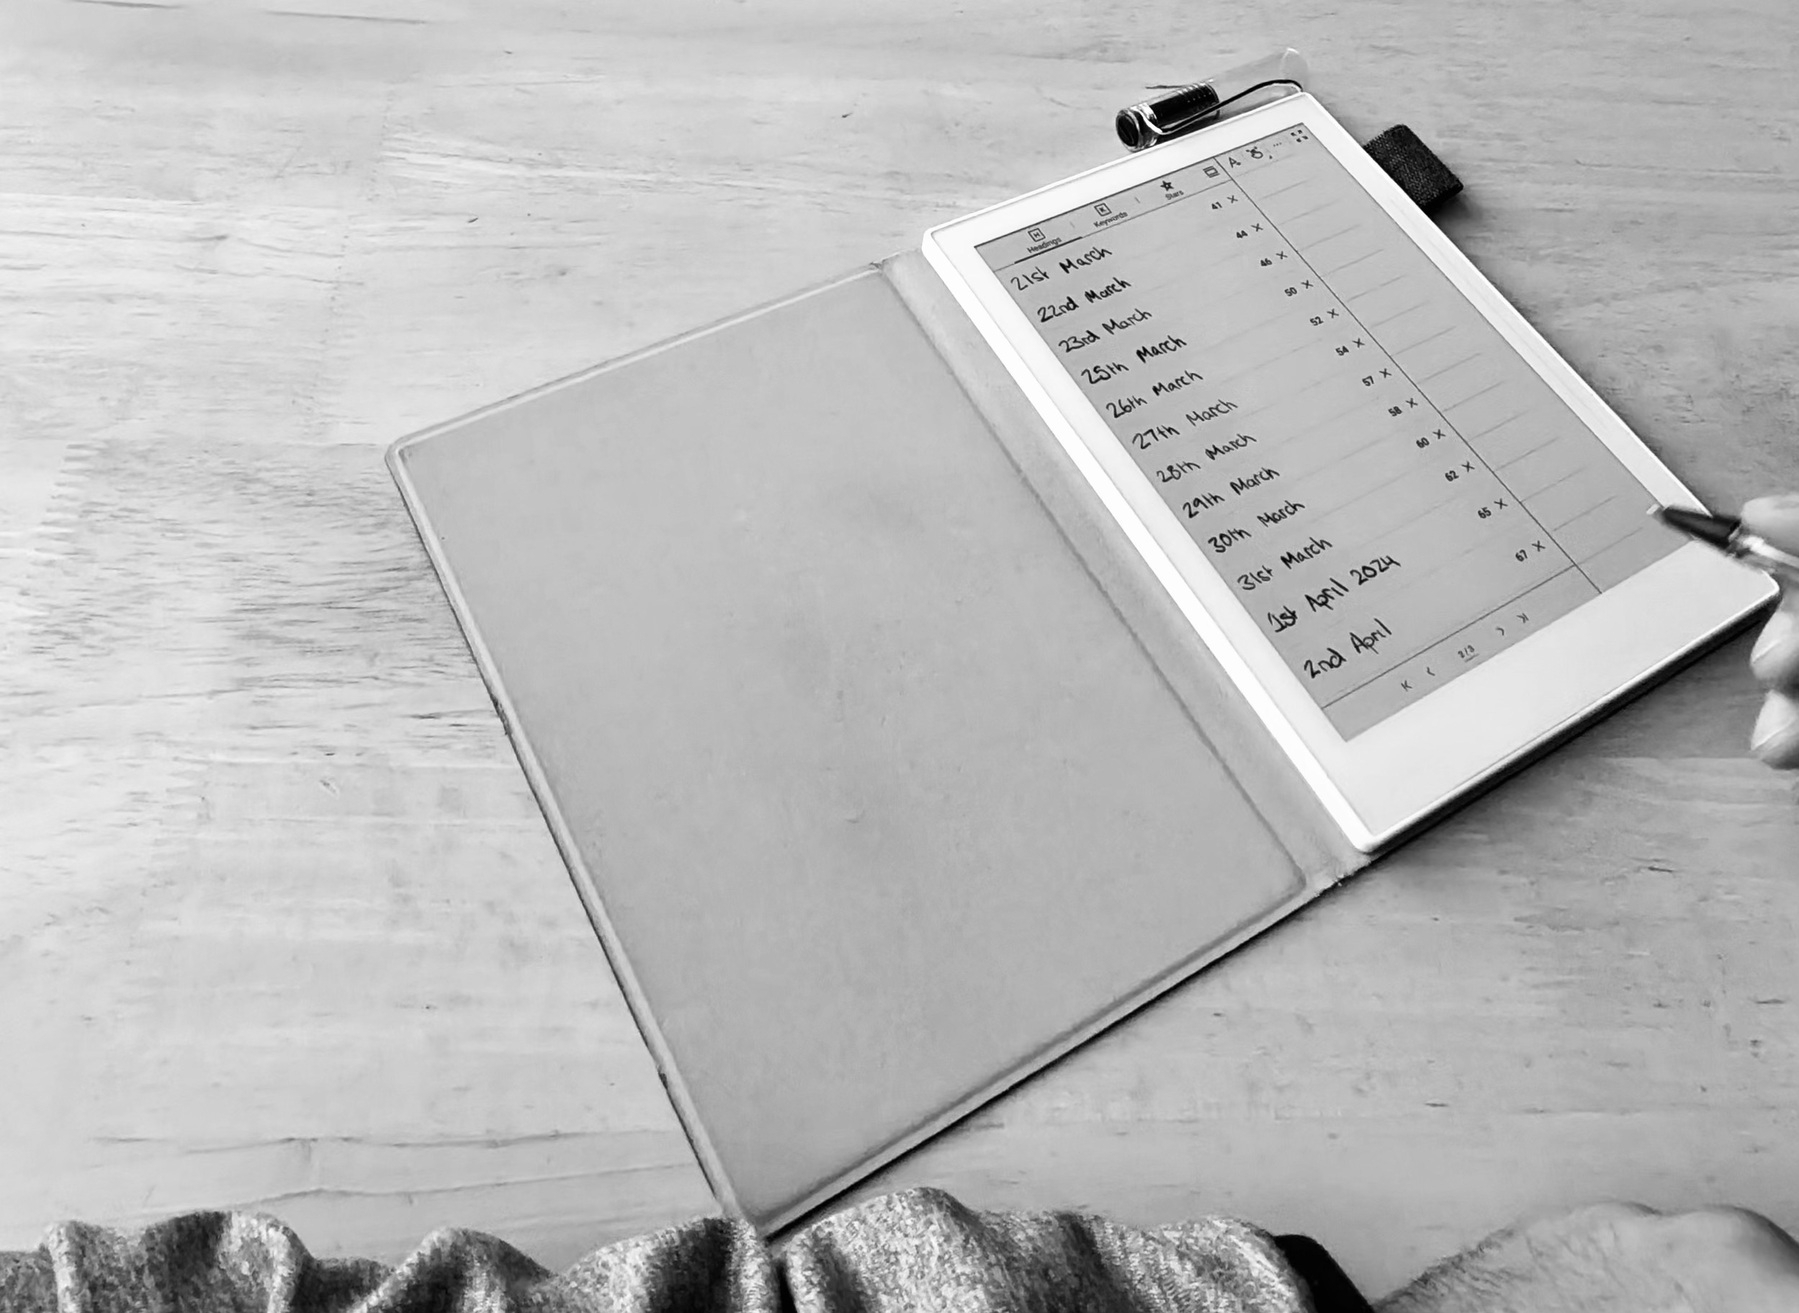 An open notebook with a handwritten list, next to a tablet displaying a calendar, on a wooden surface.